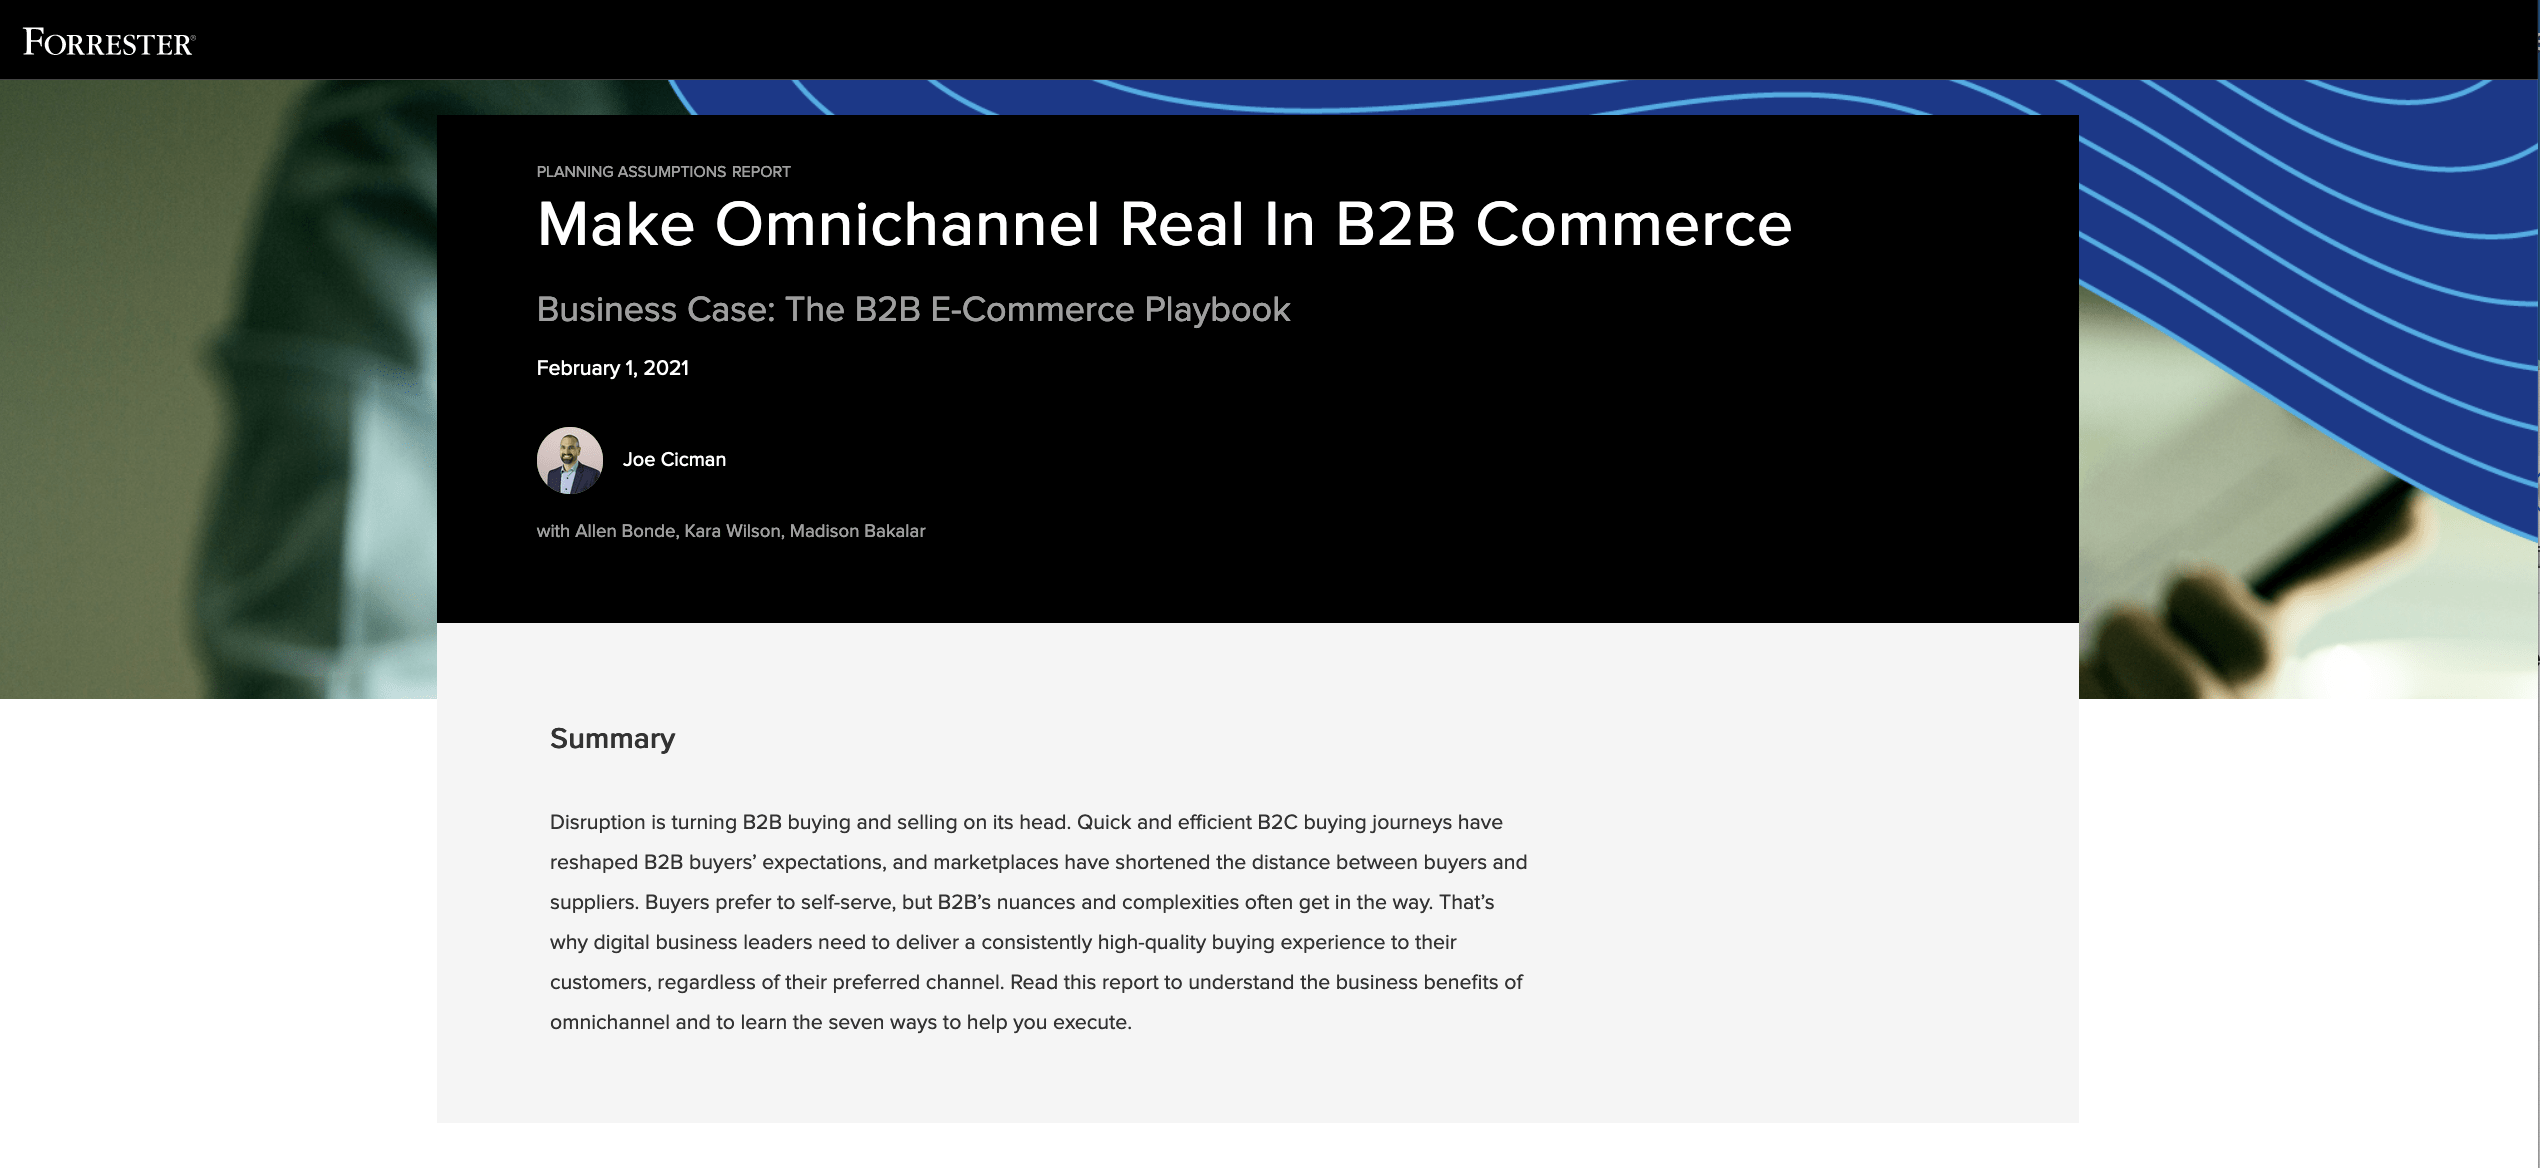 omnichannel - Forrester Report: Make Omnichannel Real in B2B Commerce